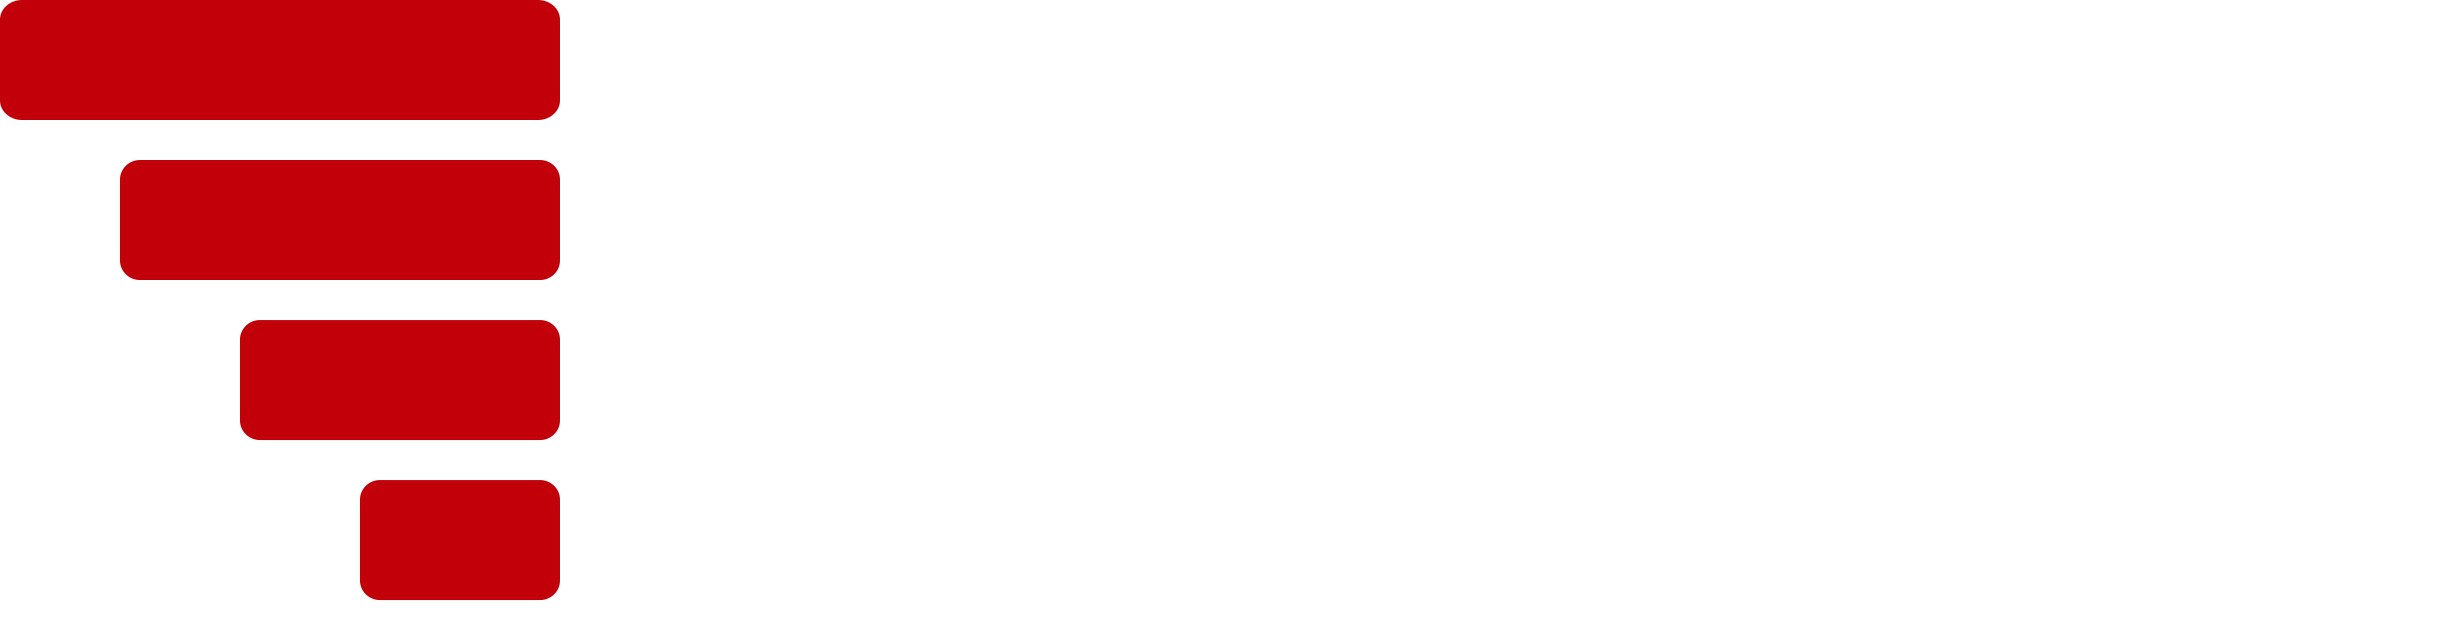 The Kenya Experience